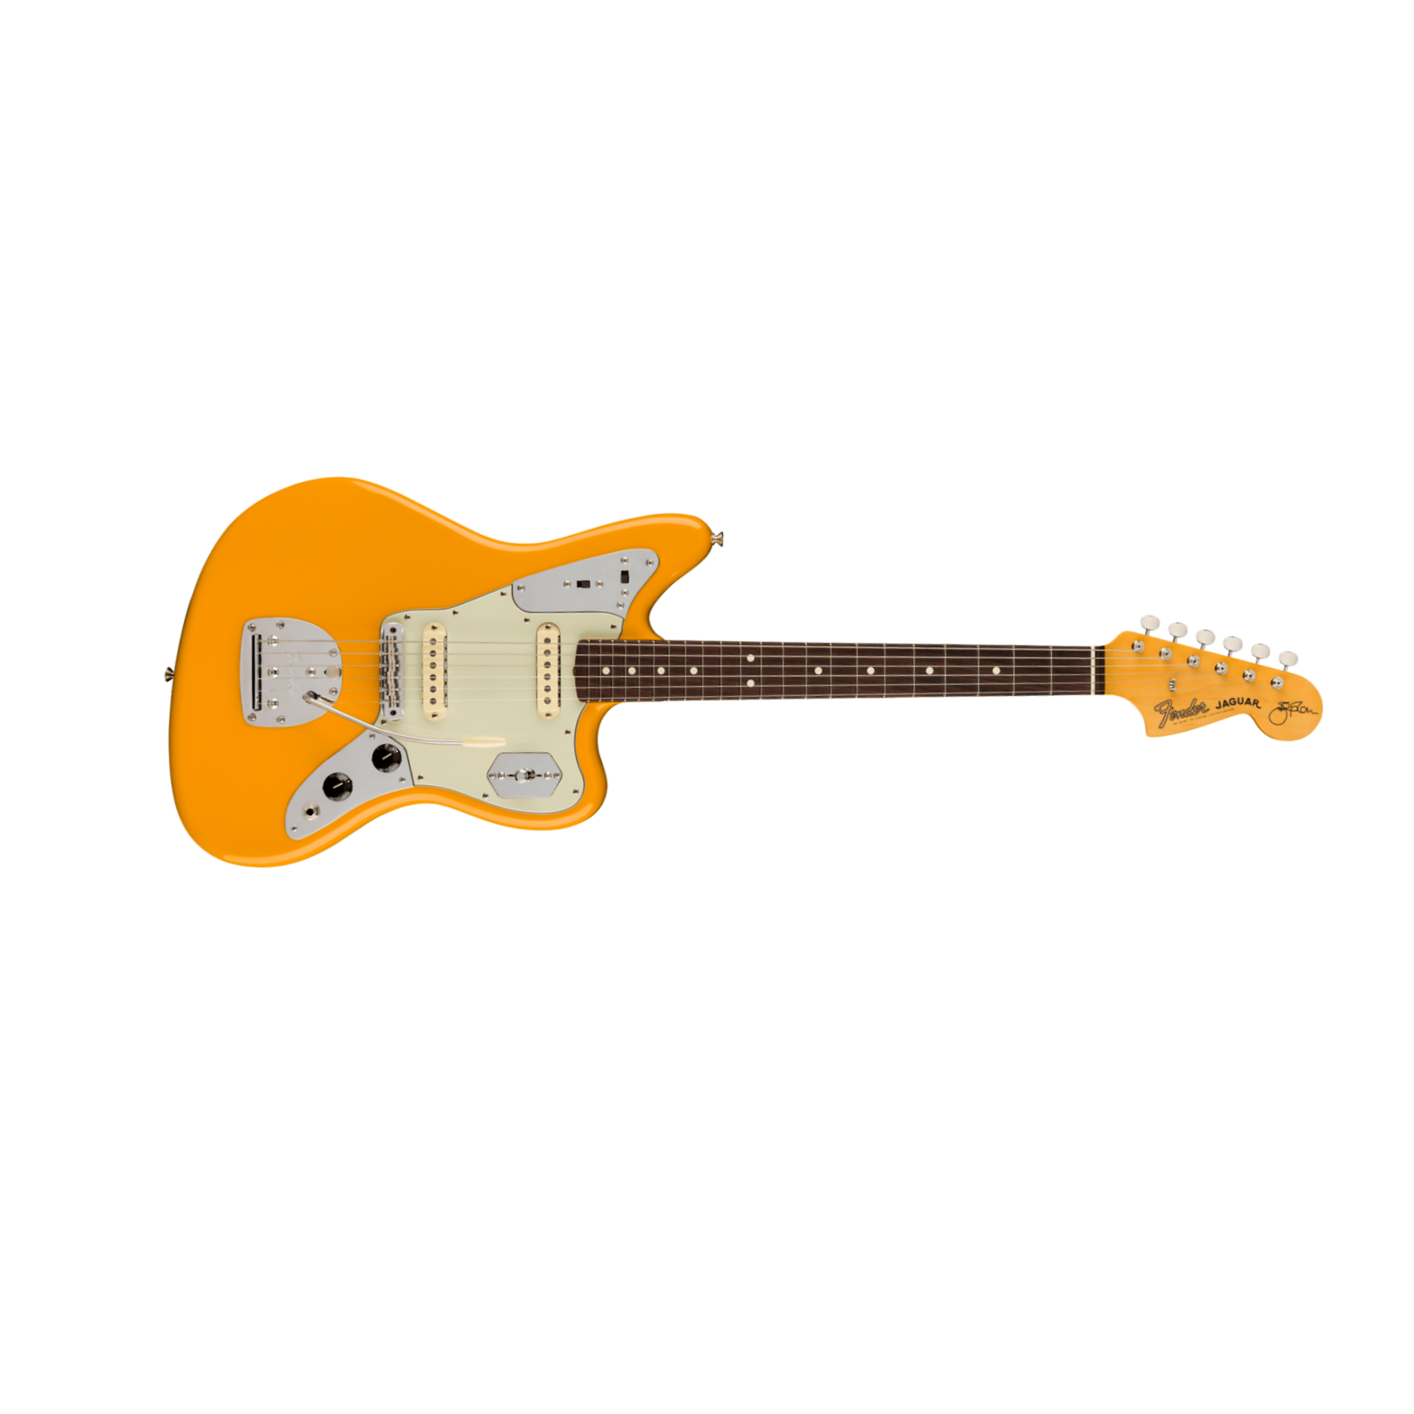 Fender Jaguar Johnny Marr Signature 2s Trem Rw - Fever Dream Yellow - Guitarra electrica retro rock - Main picture